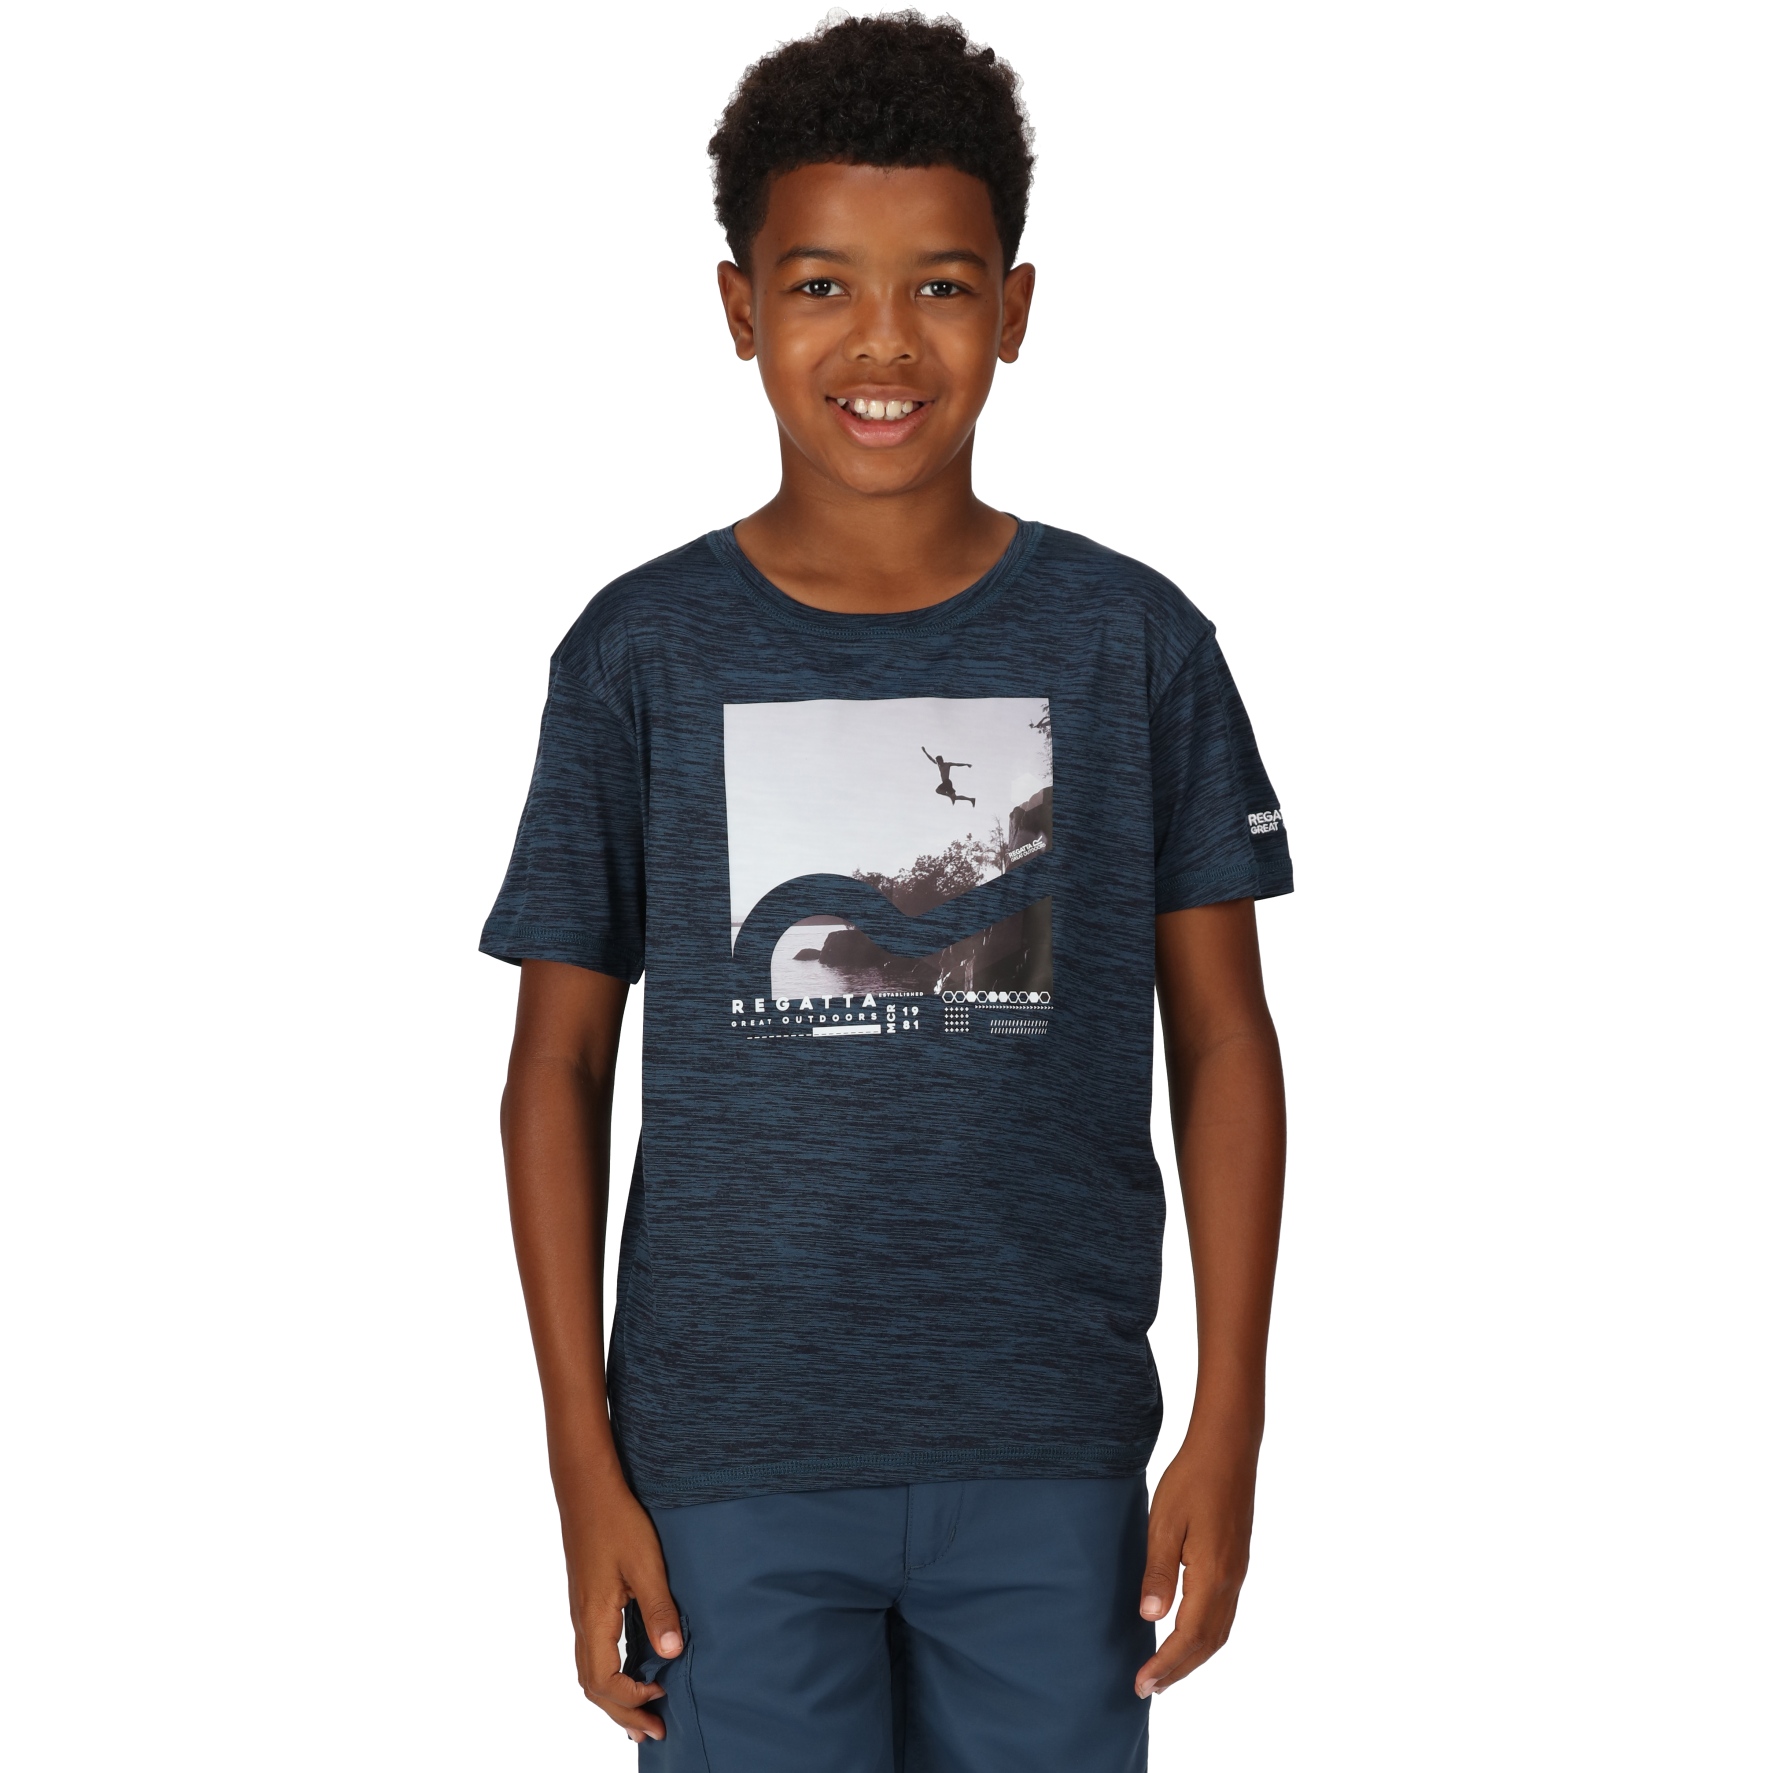 Productfoto van Regatta Alvarado VII T-Shirt Kinderen - Blue Wing Marl 786